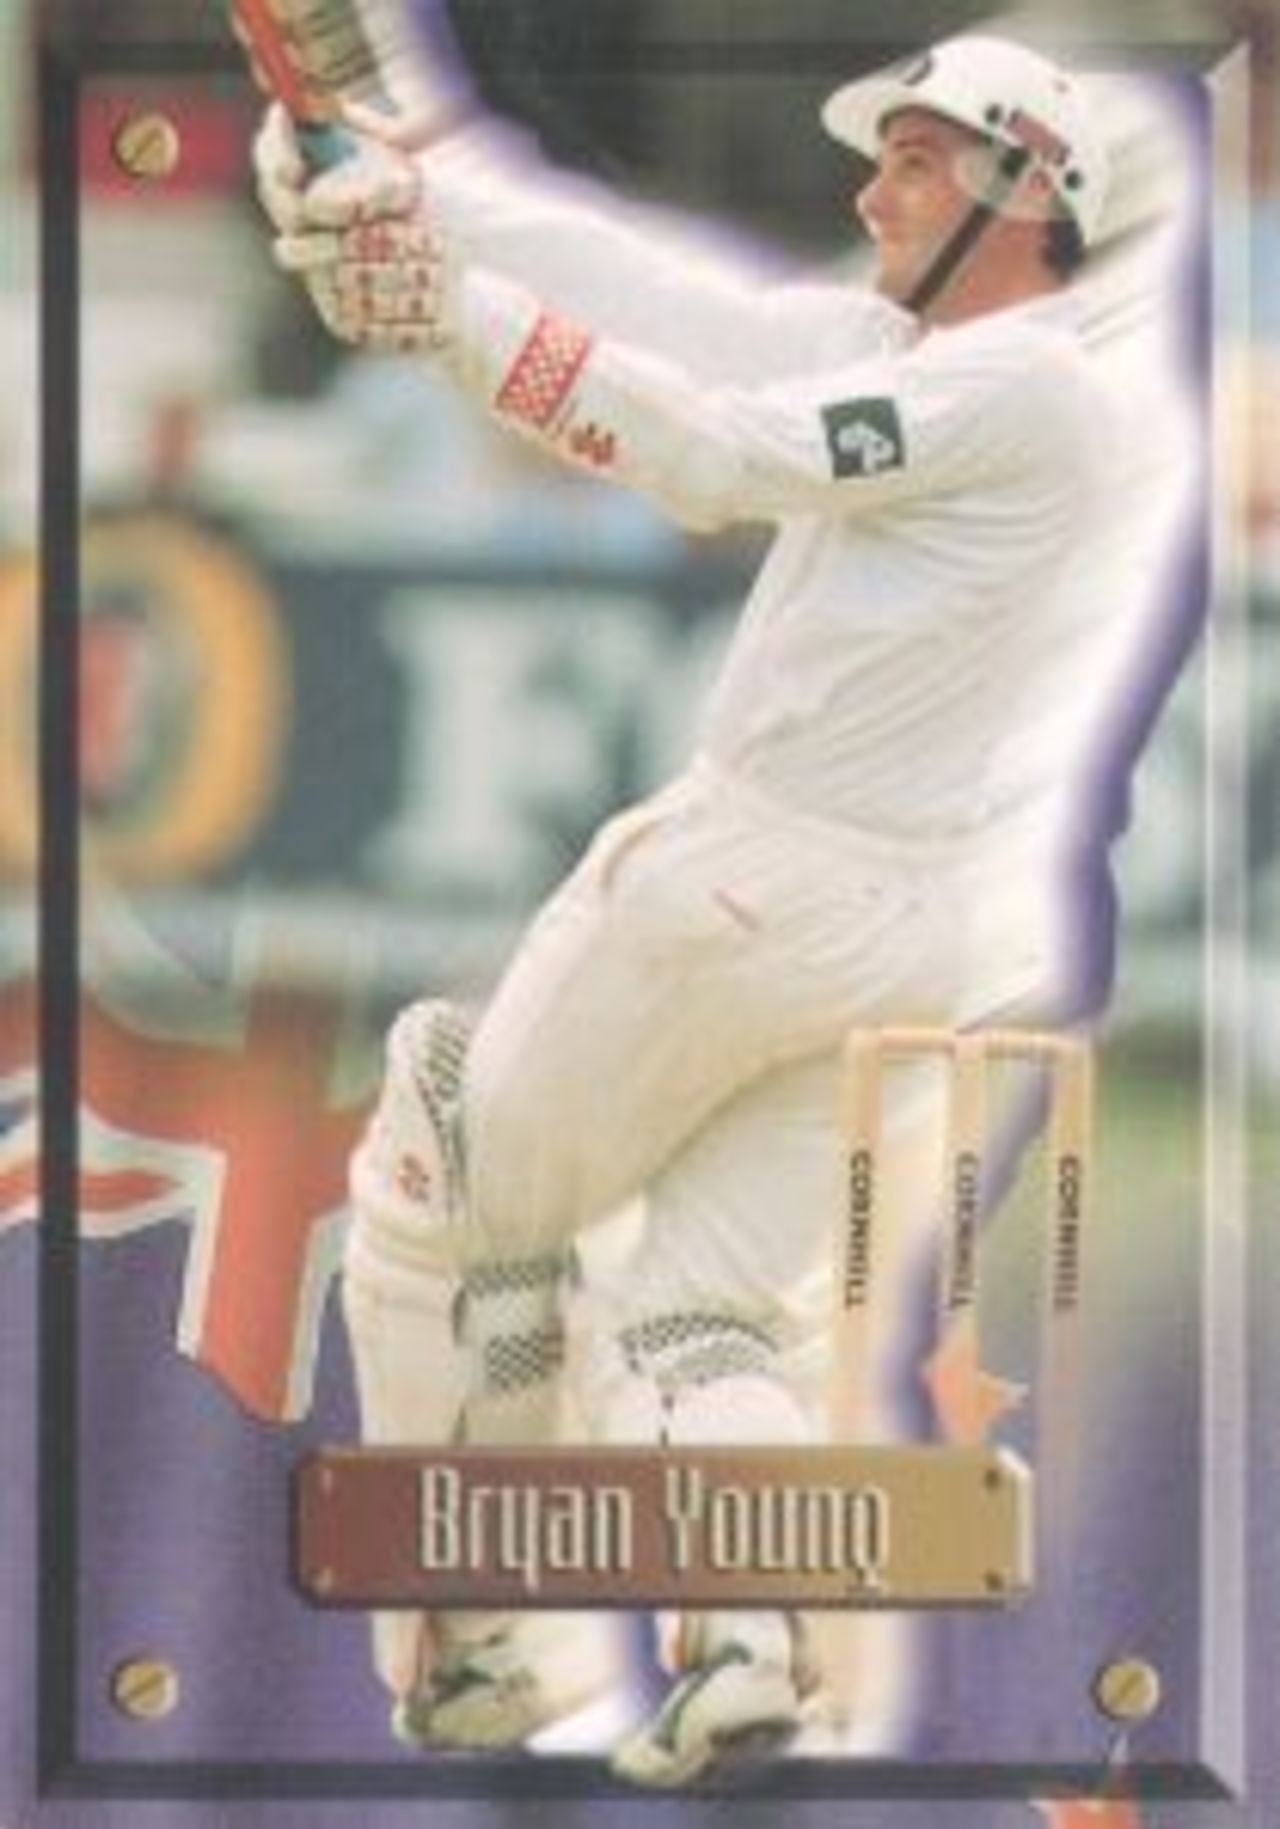 Trade card: Top deck Bryan Young